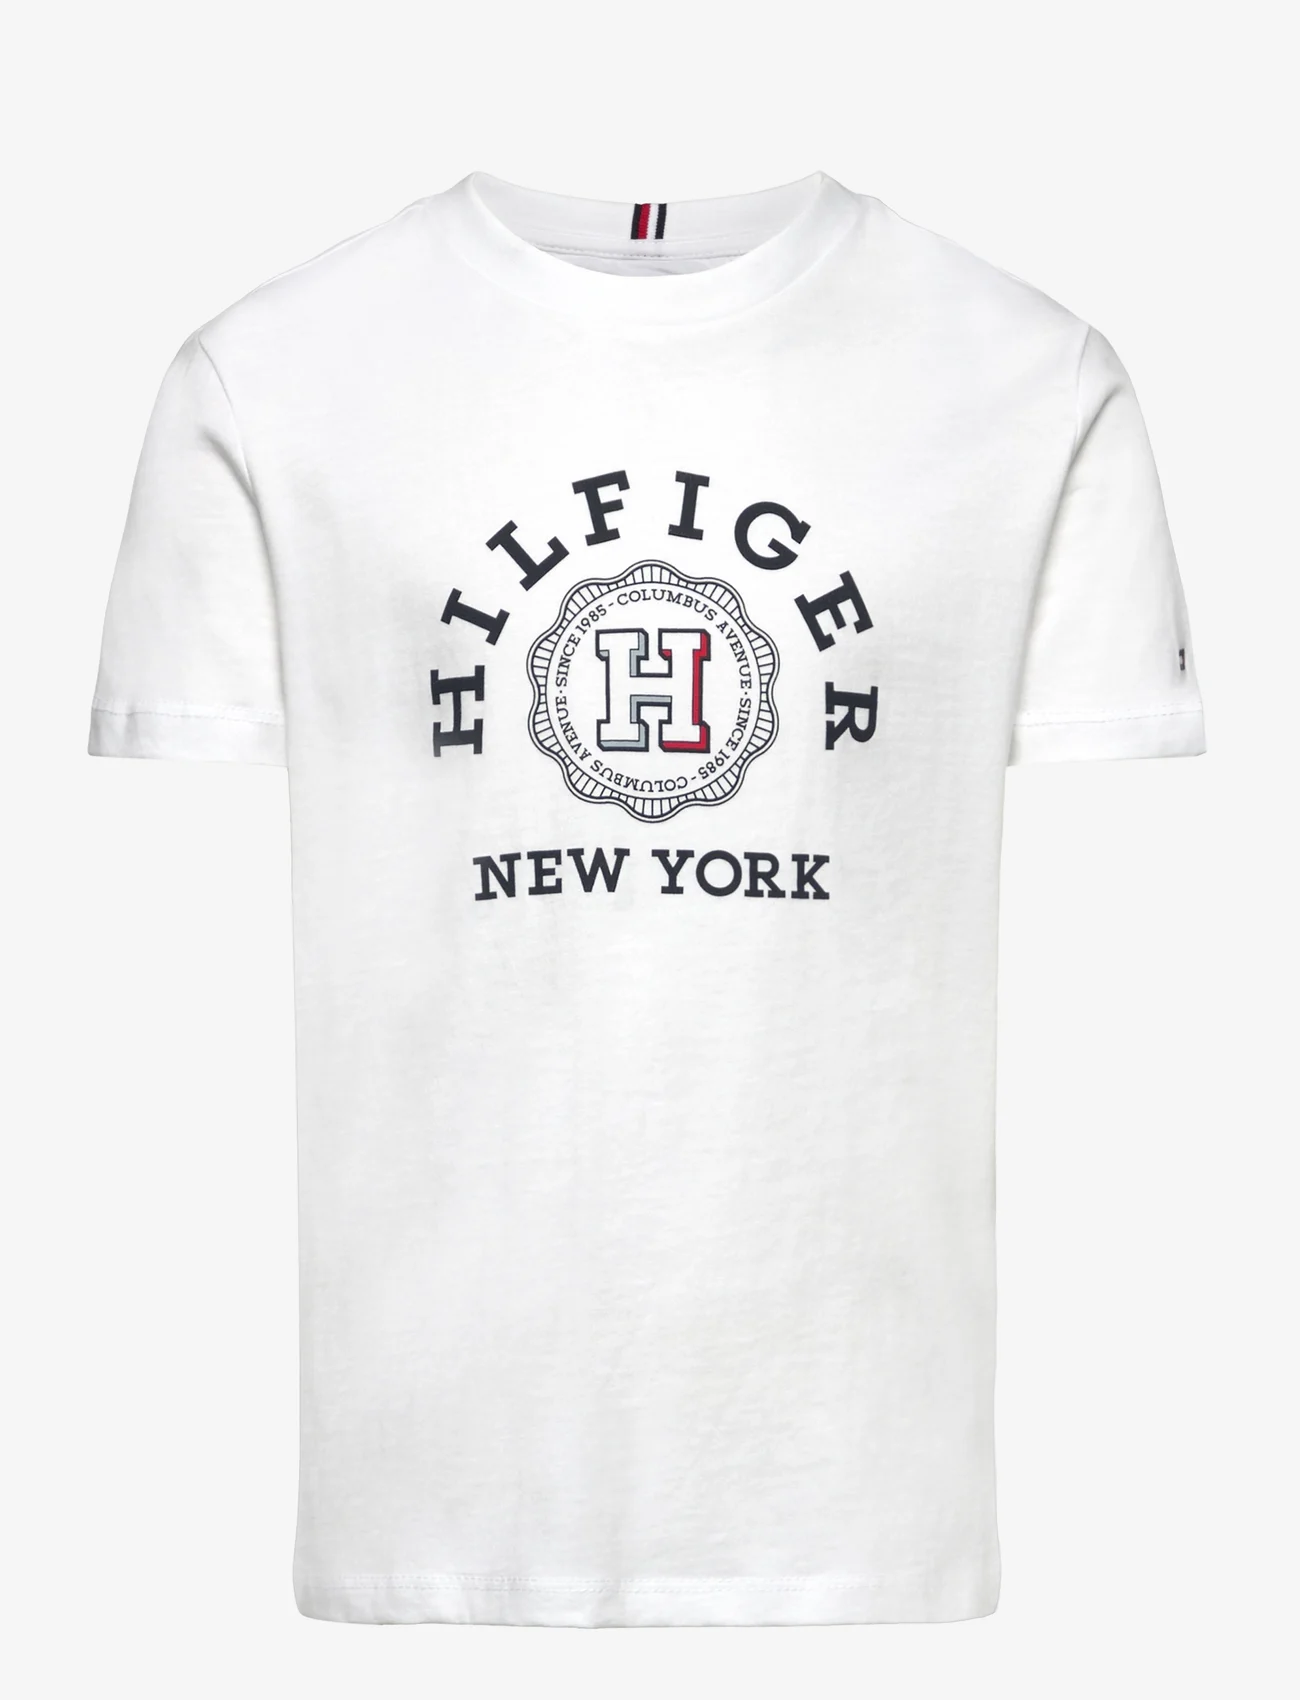 Tommy Hilfiger - MONOTYPE ARCH TEE S/S - kortärmade t-shirts - white - 0